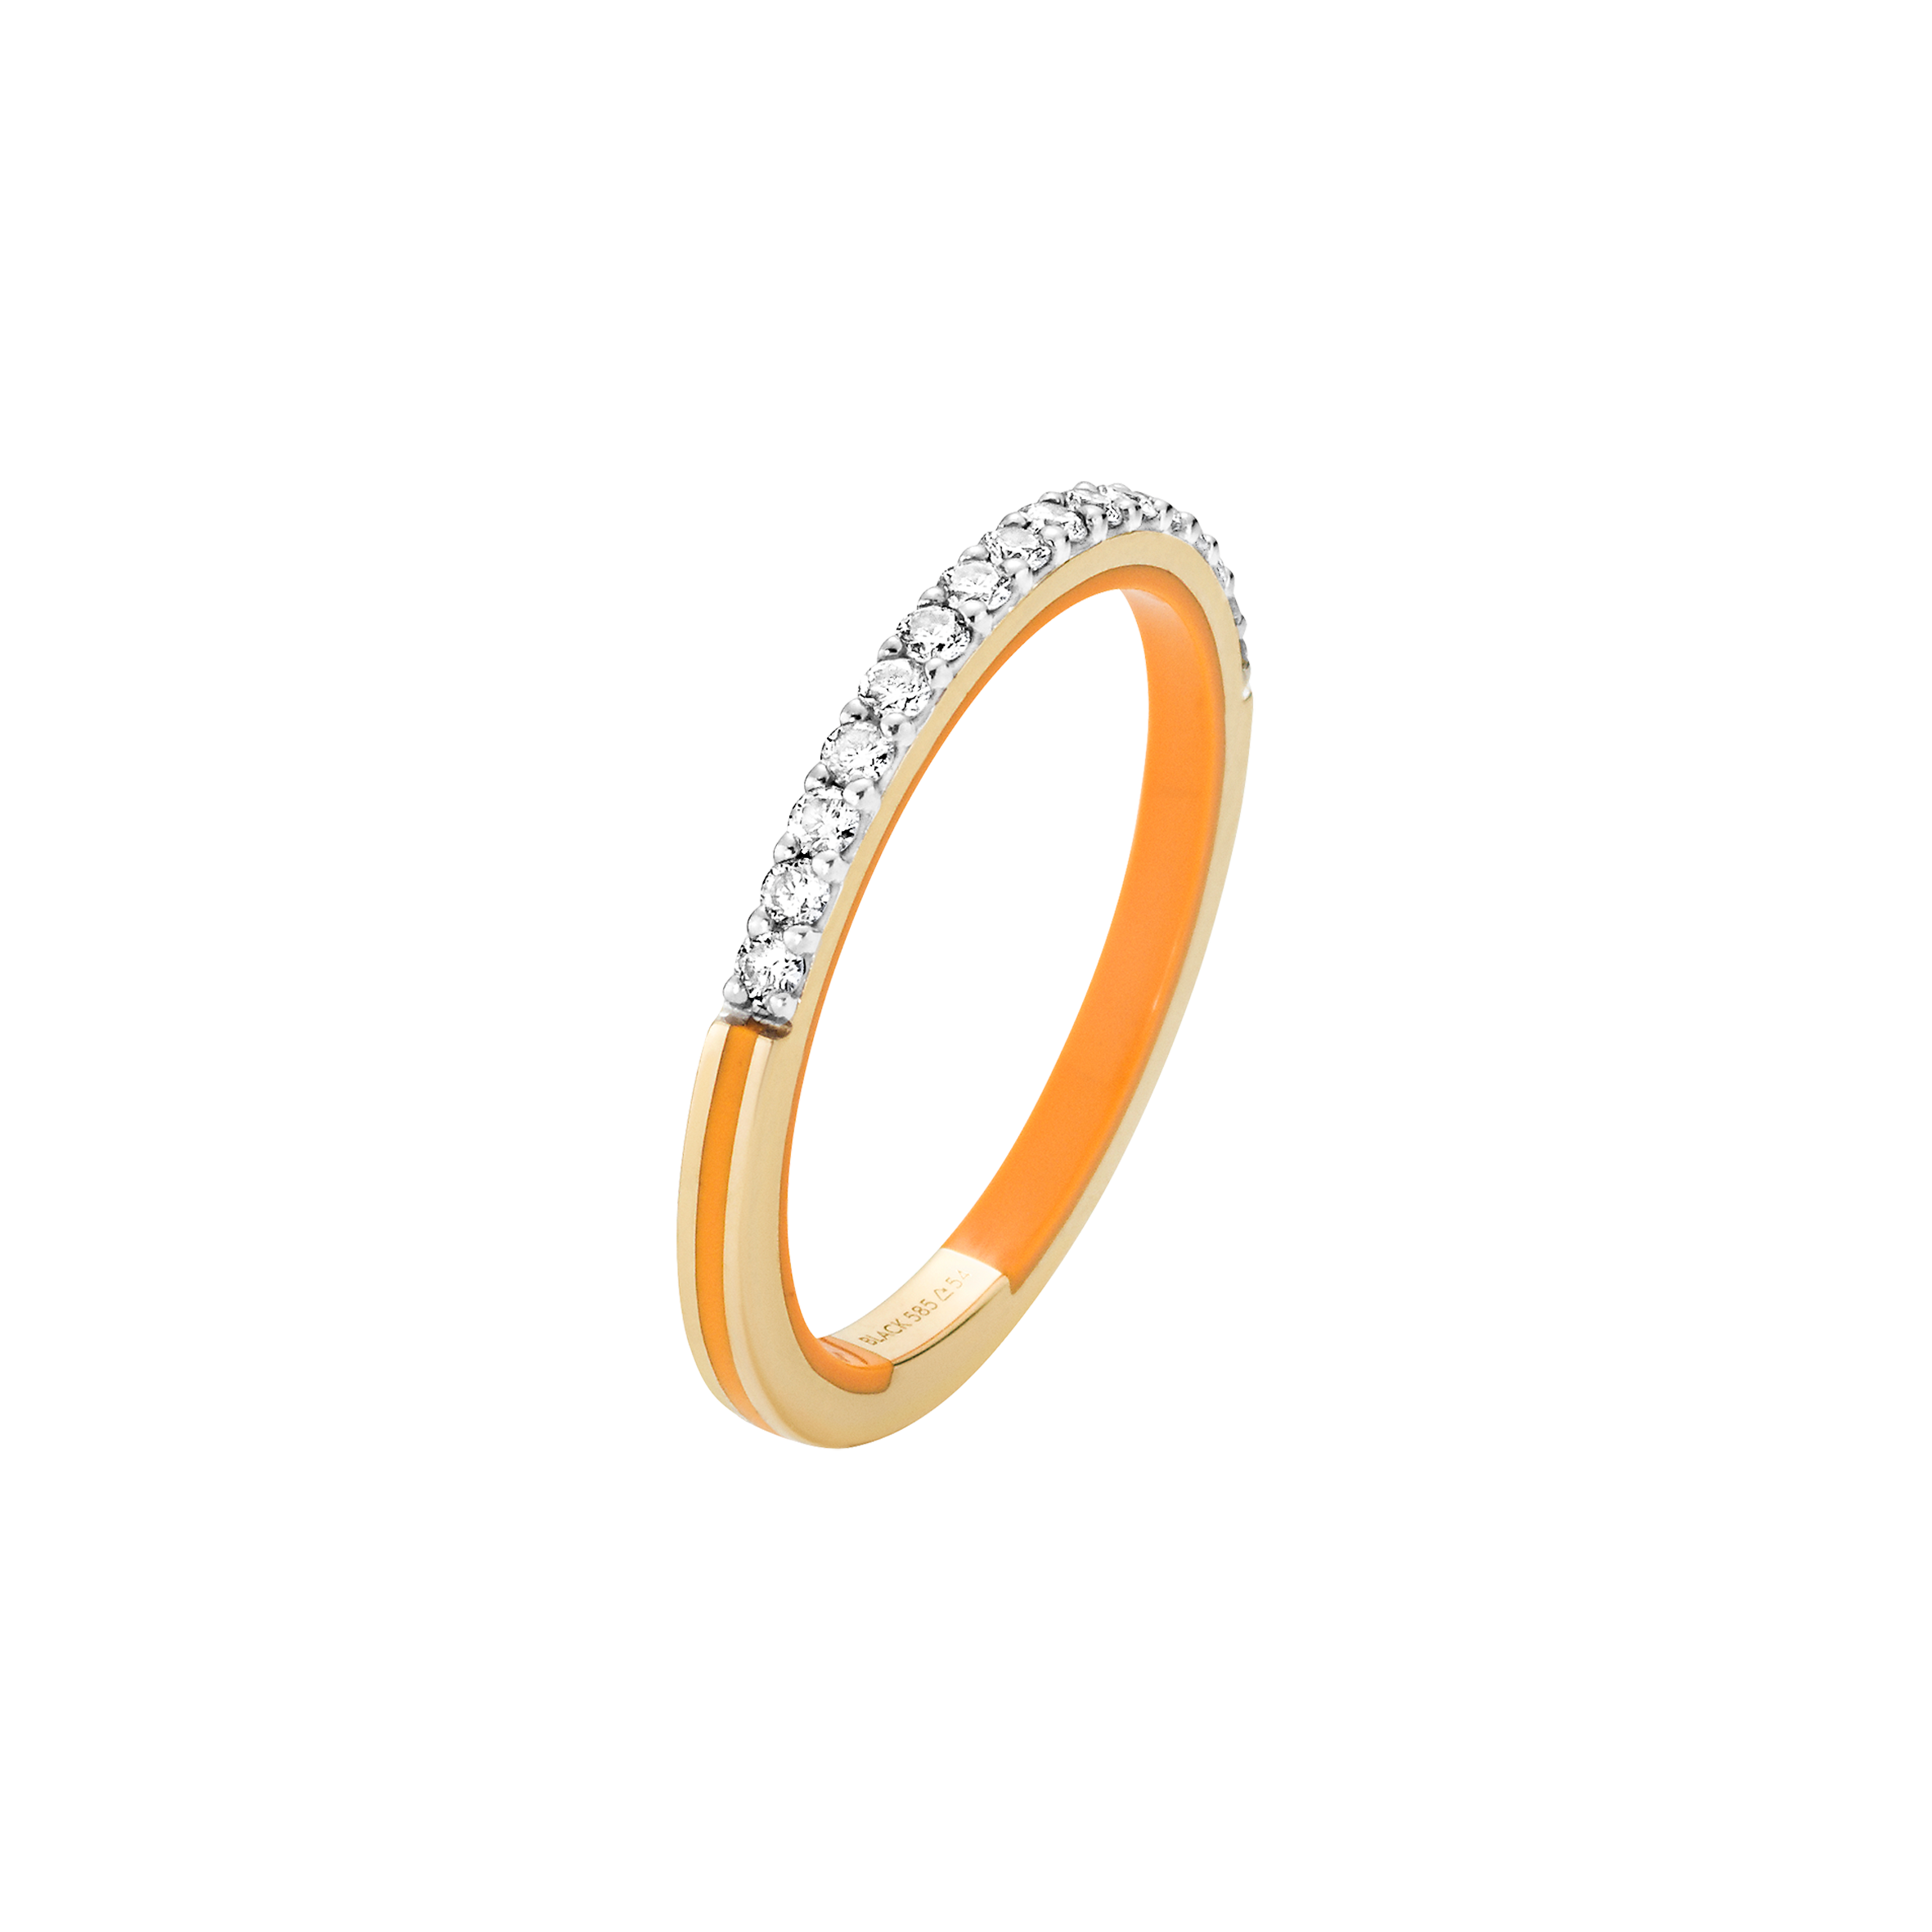 3 Gram Gold Ring Design || Sone Ki Anguhti || Dubai Ring || Gold Ring New  Design || Fancy Rings - YouTube